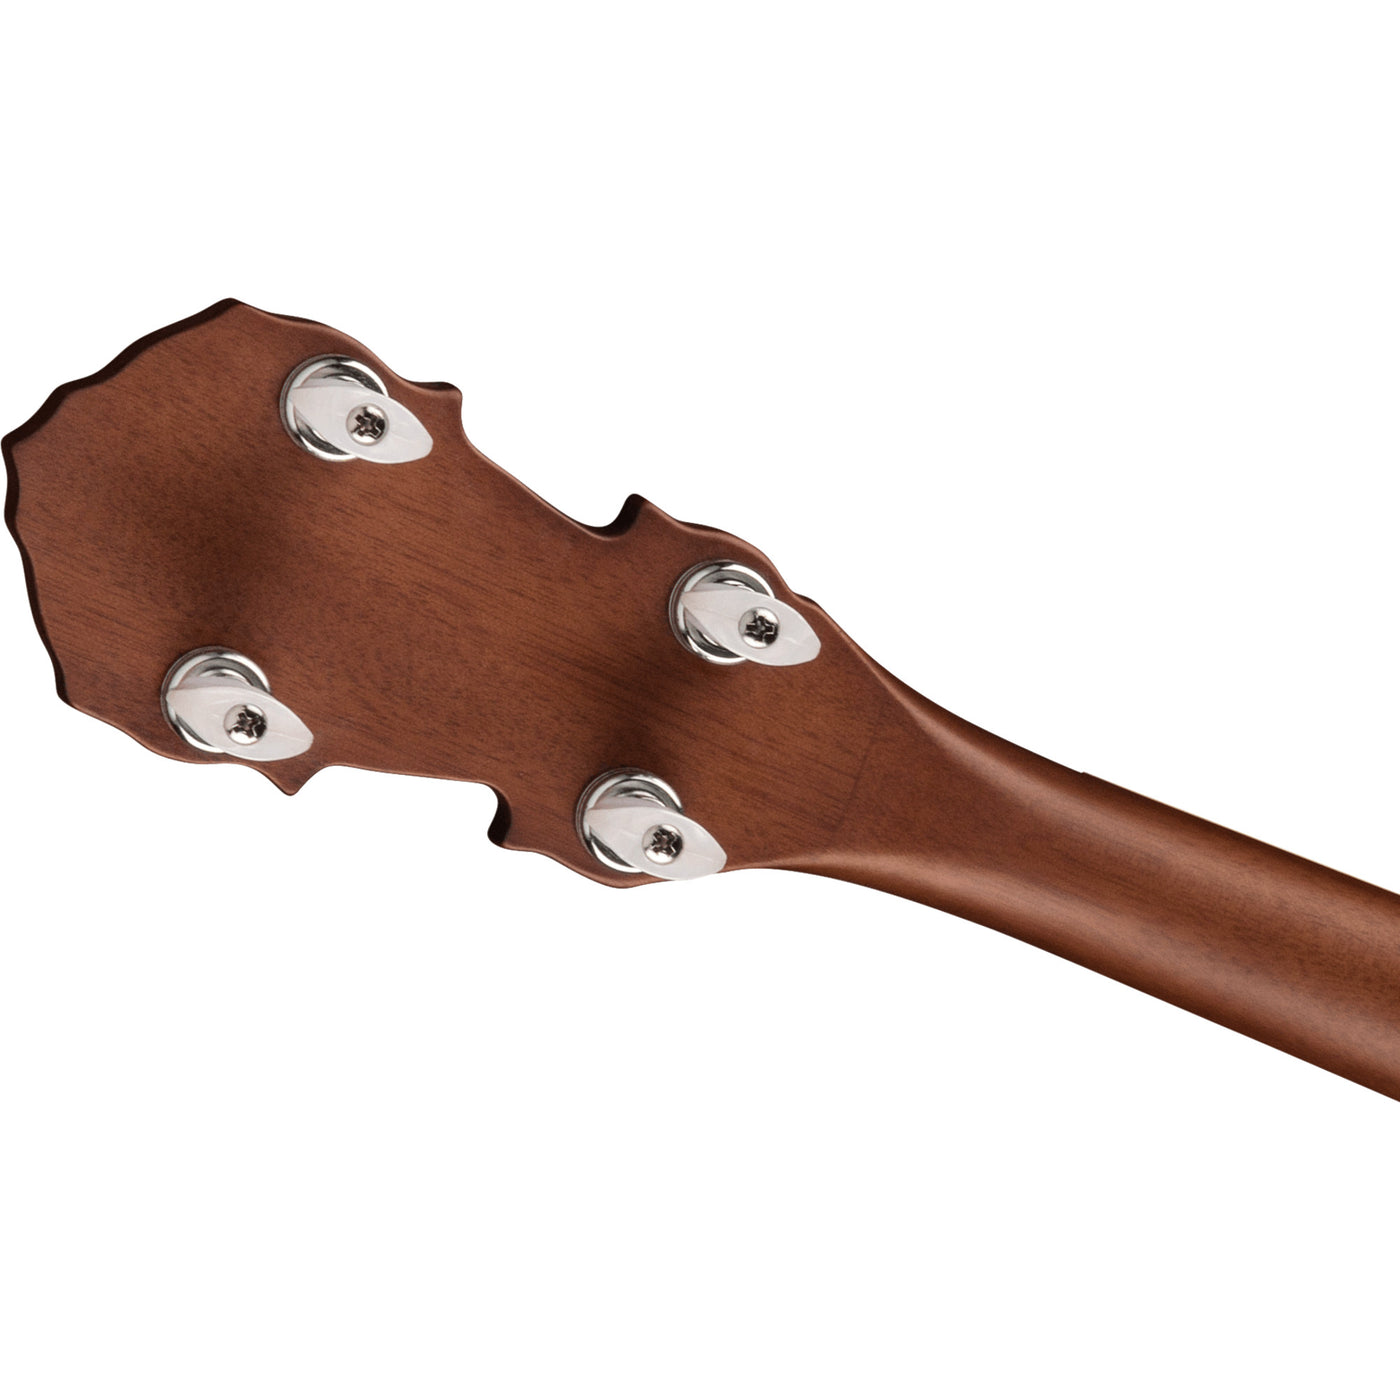 Fender Paramount PB-180E Banjo (0970302321)